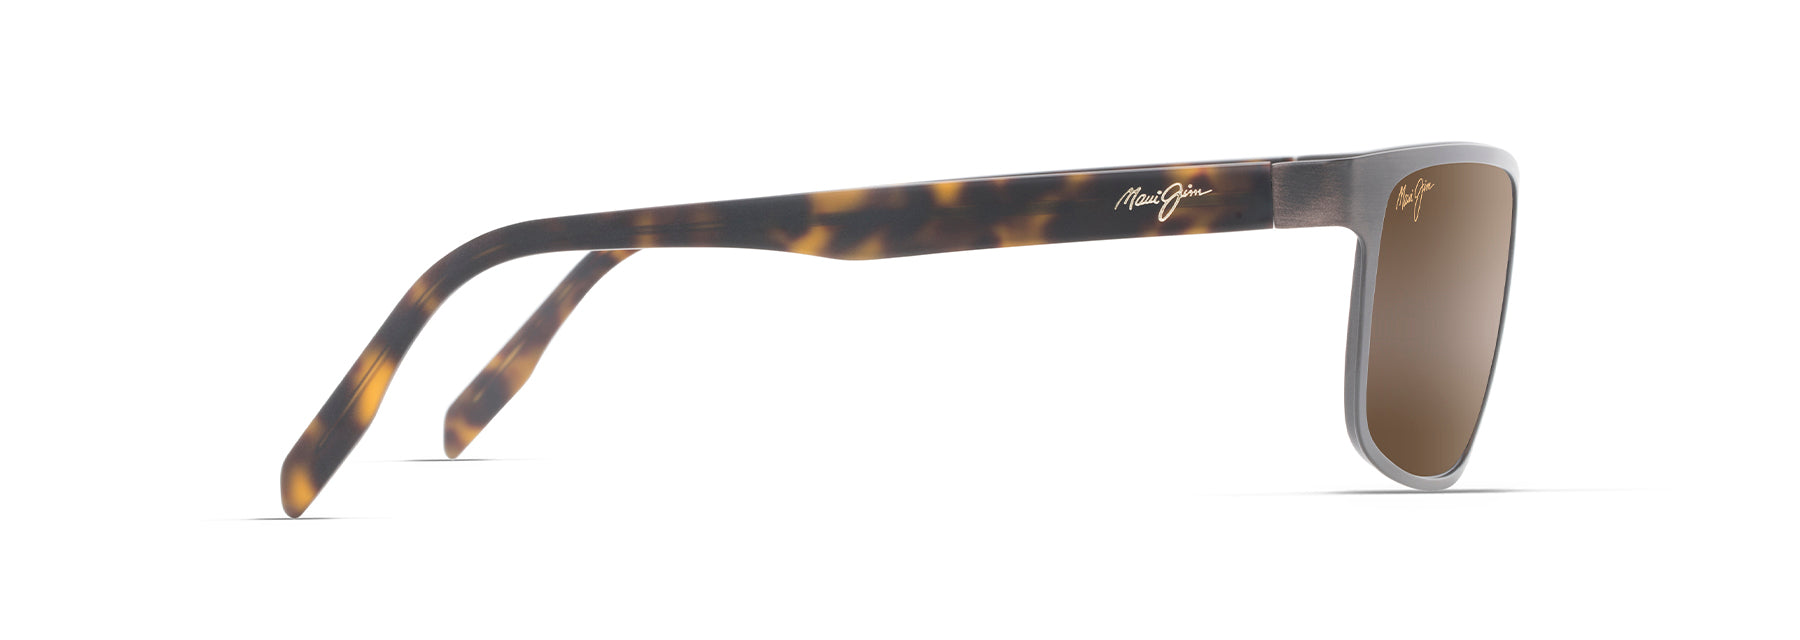 Maui Jim Anemone Sunglasses